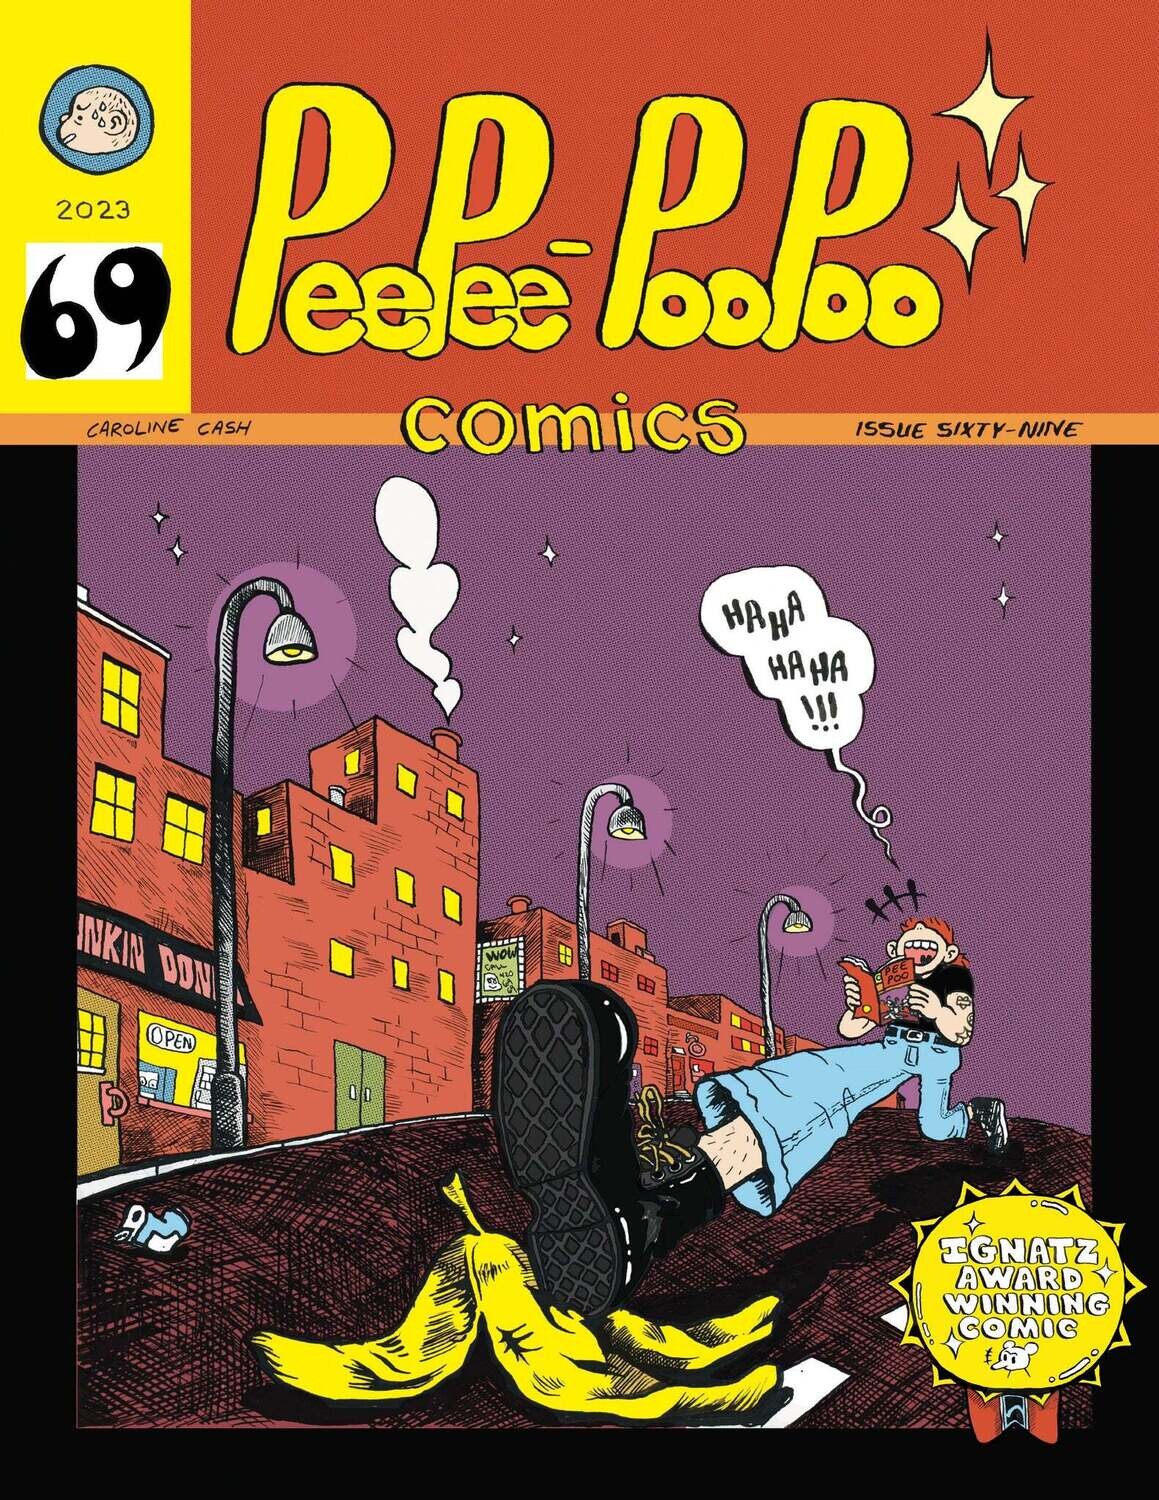 PeePee-PooPoo Comics, issue 69 - Comic by Caroline Cash